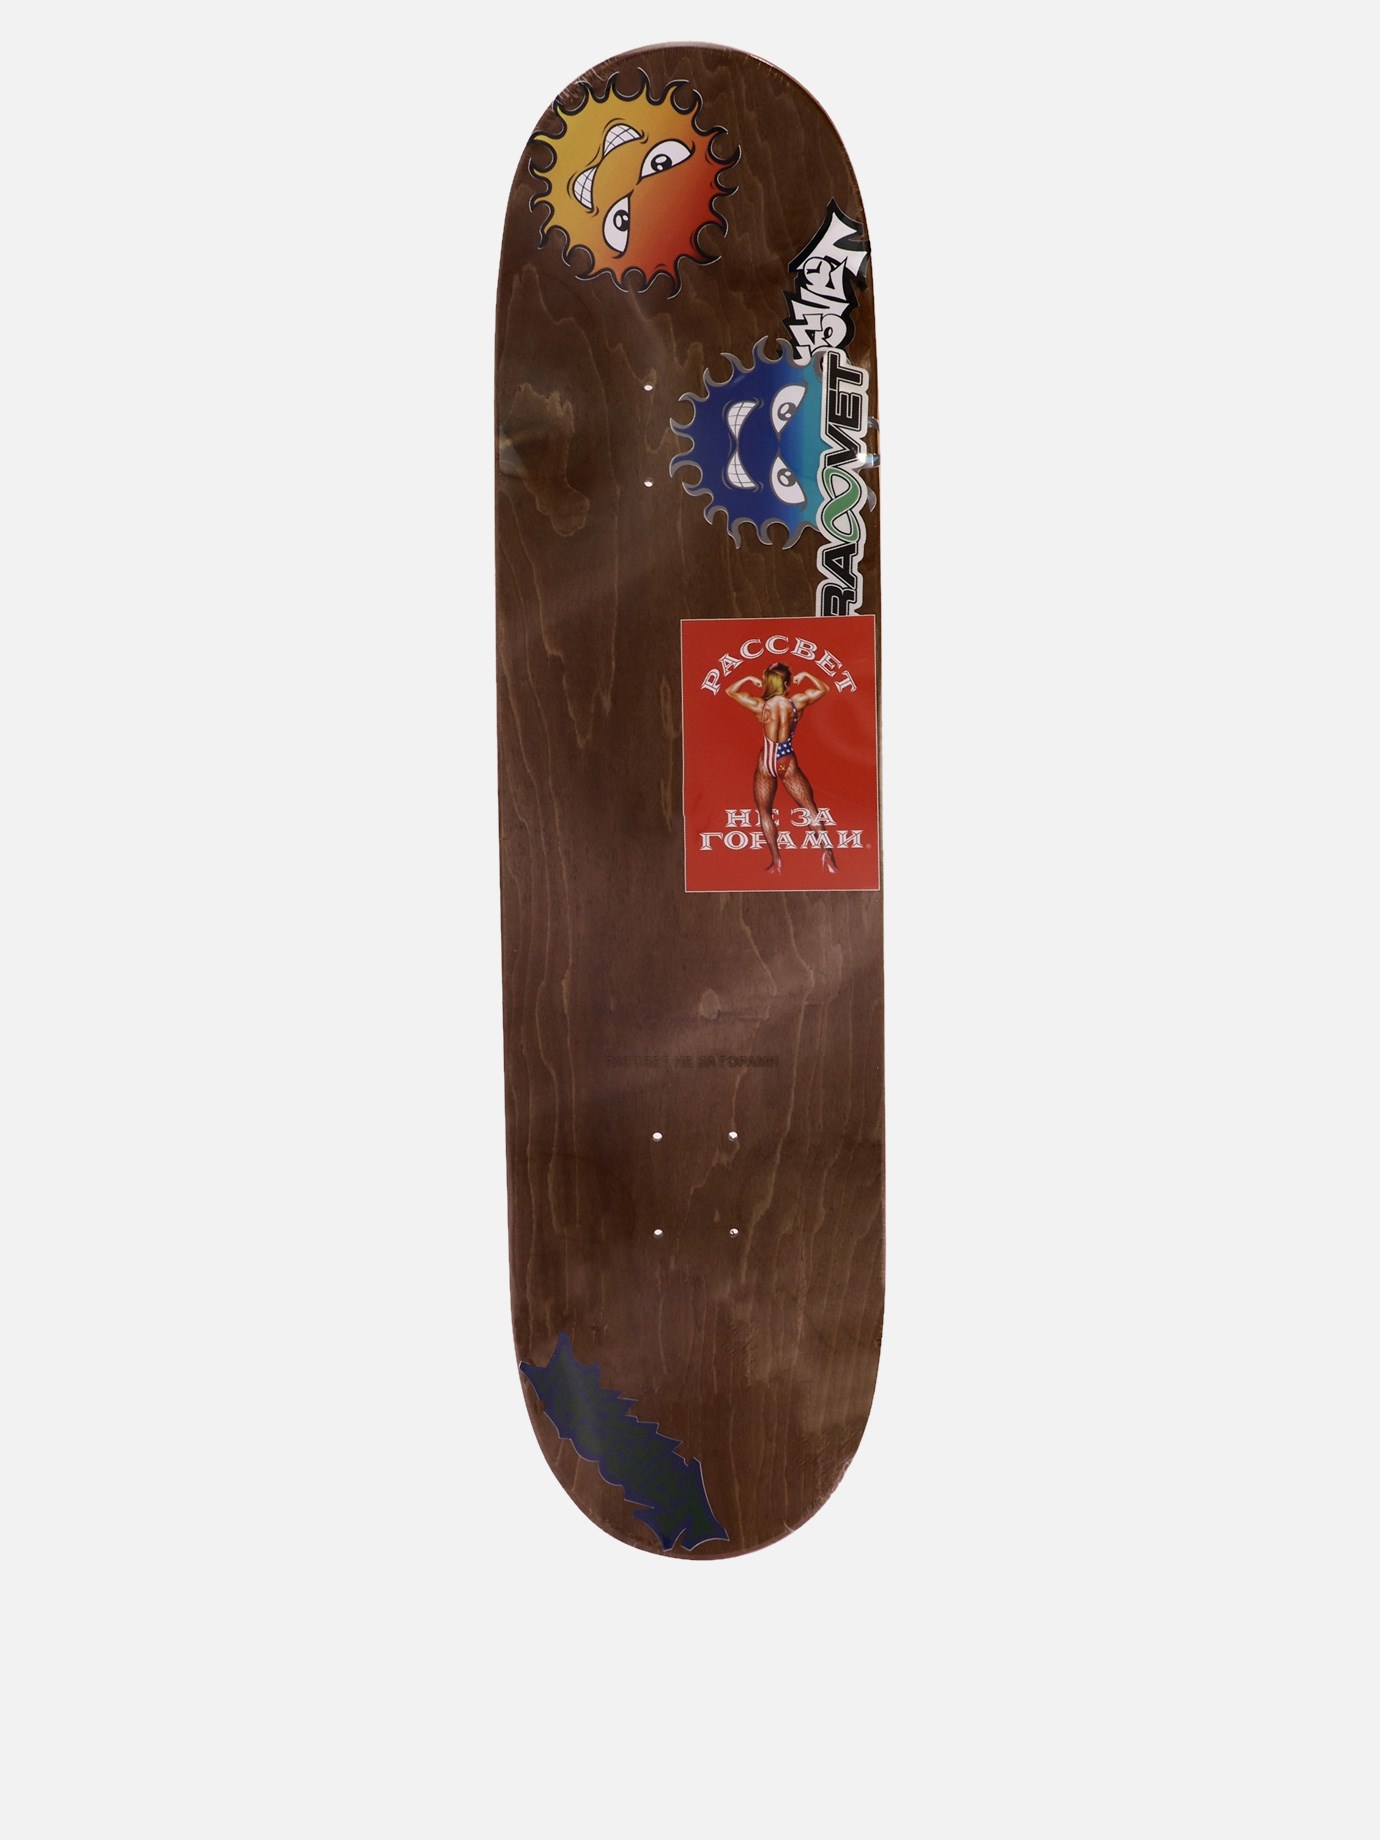 Erable skateboard by Paccbet